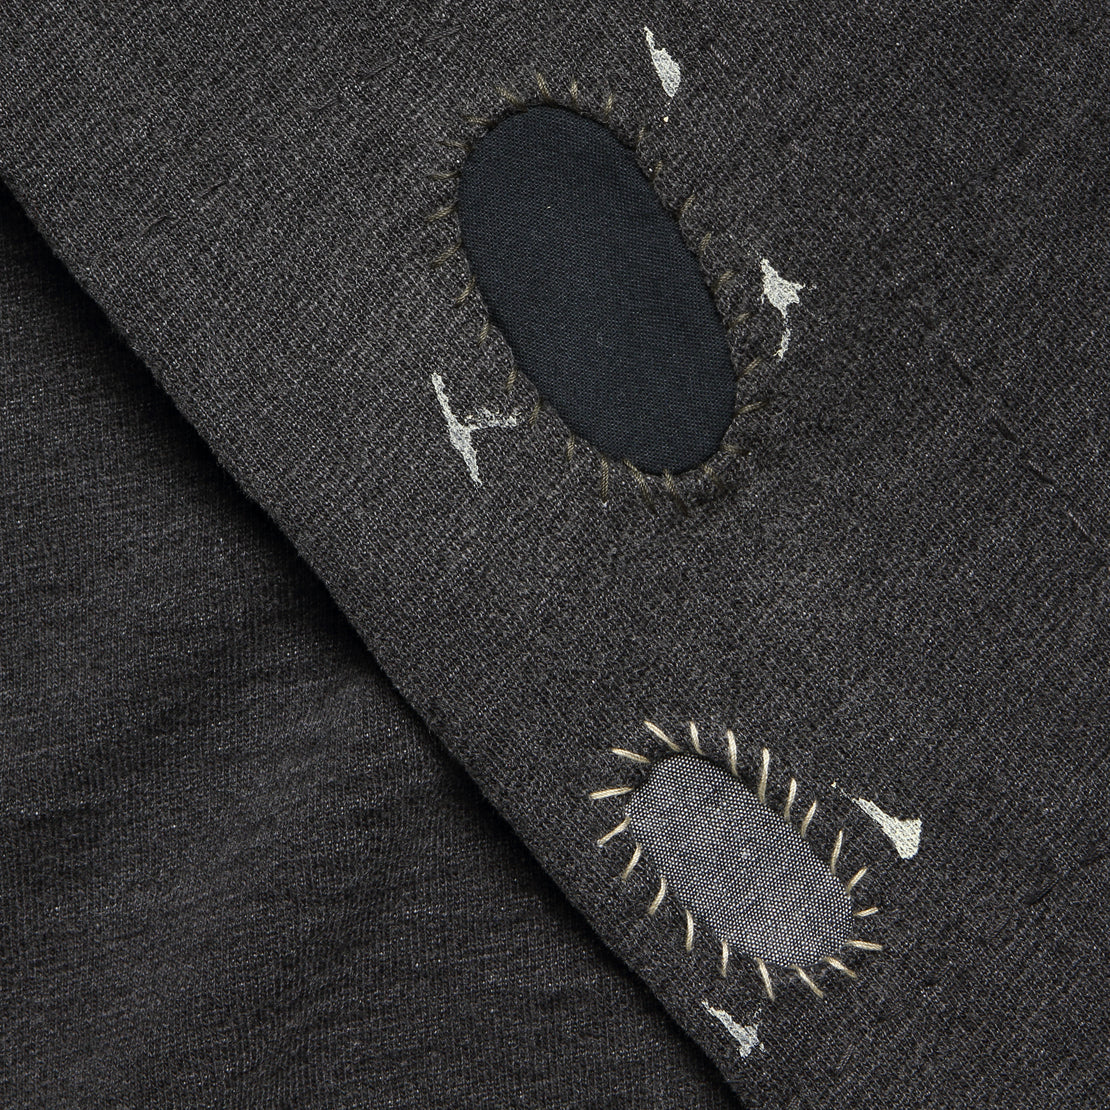 Distressed French Terry Sweatshirt - Sulphur Black